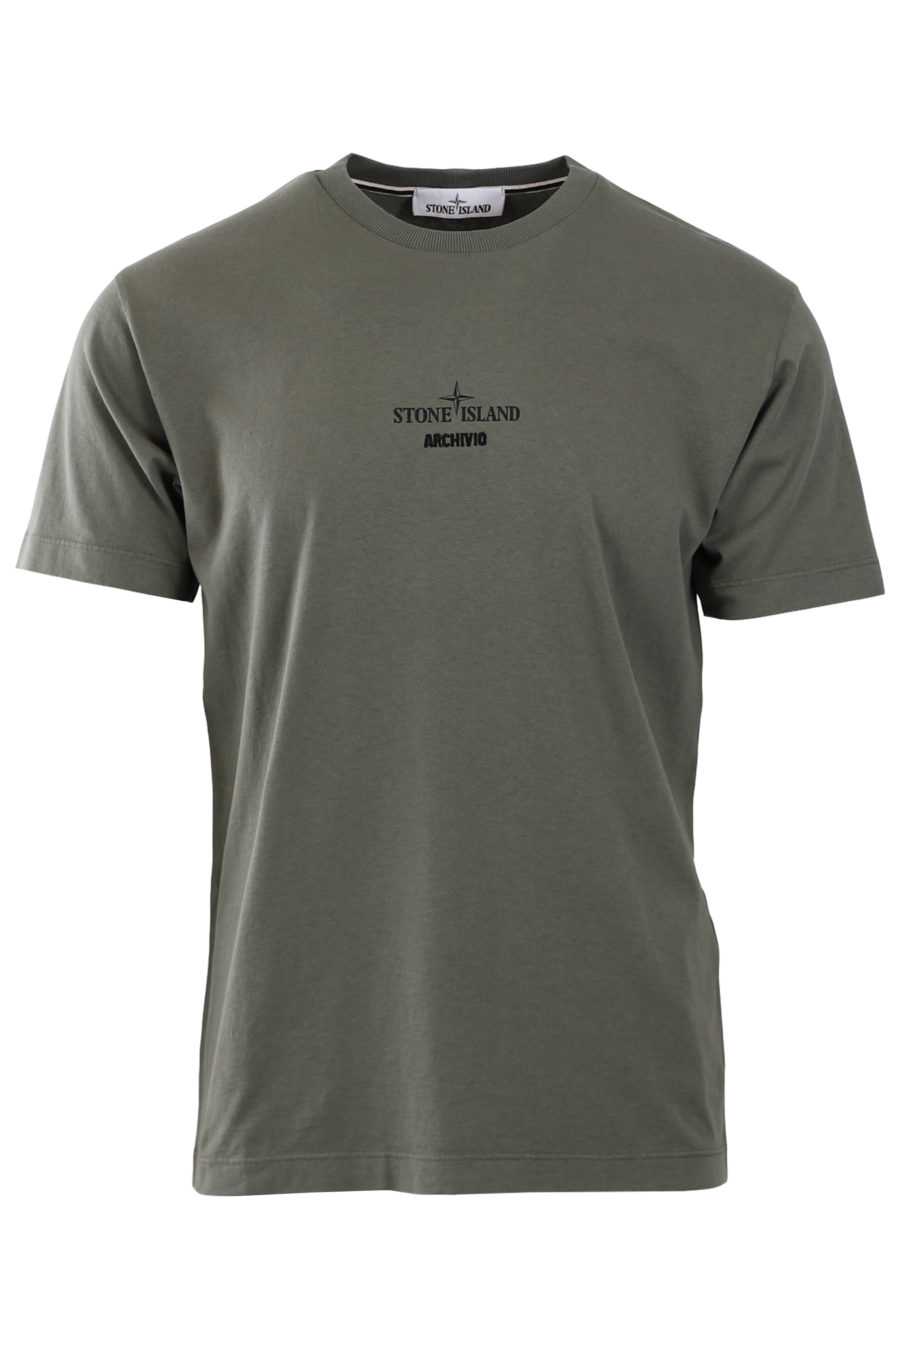 Camiseta de color militar "Archivio" - 918156fa9bc978528bd7c238e25a4fa0fdcec7fa